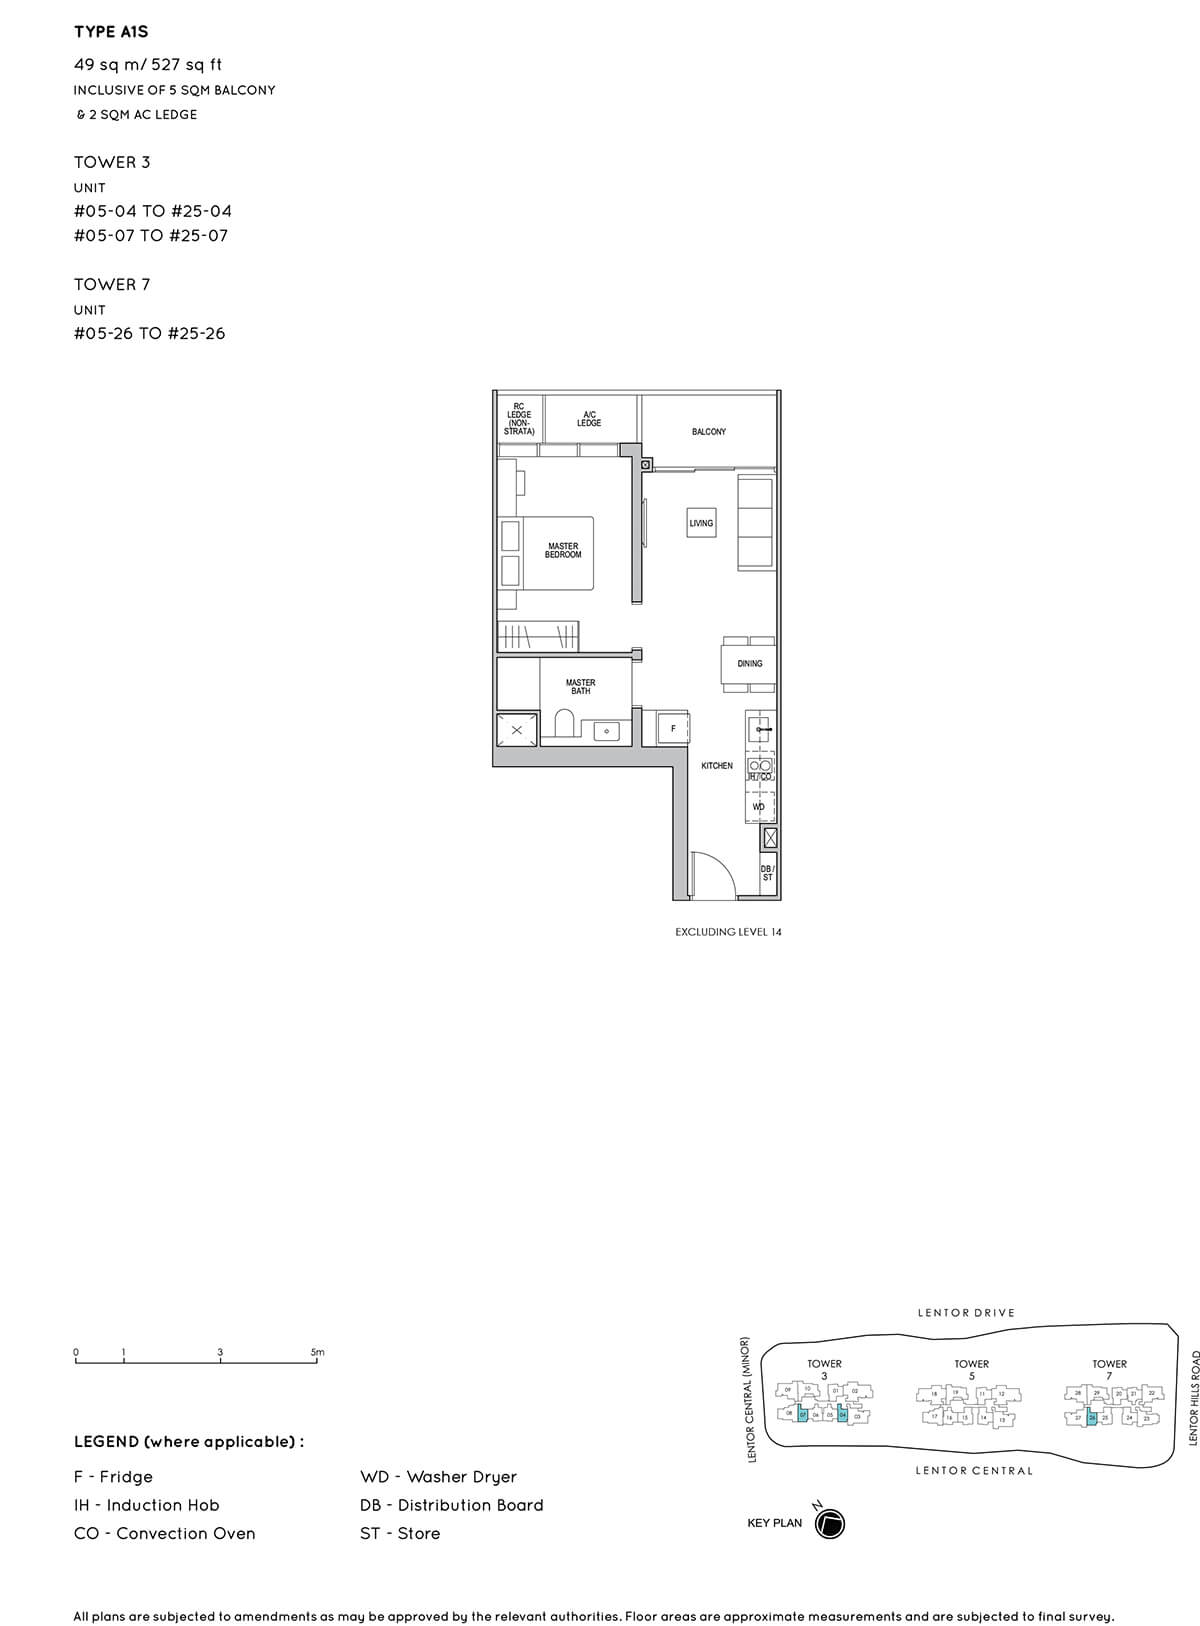 Lentor Modern 1-Bedroom Floorplan